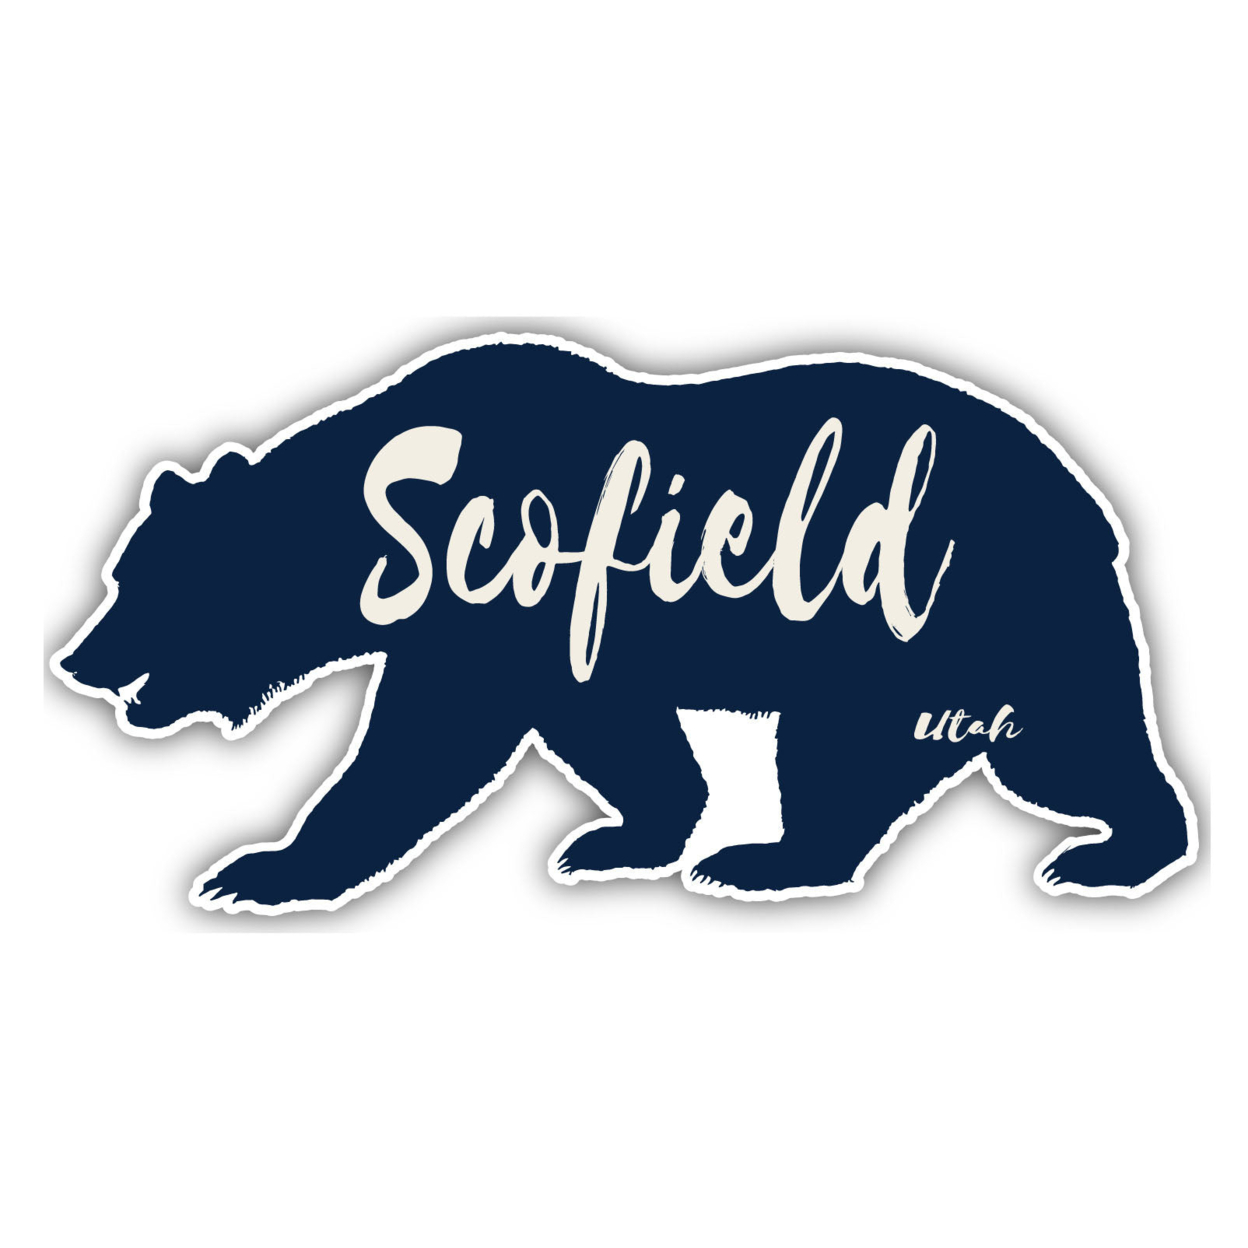 Scofield Utah Souvenir Decorative Stickers (Choose Theme And Size) - Single Unit, 4-Inch, Tent